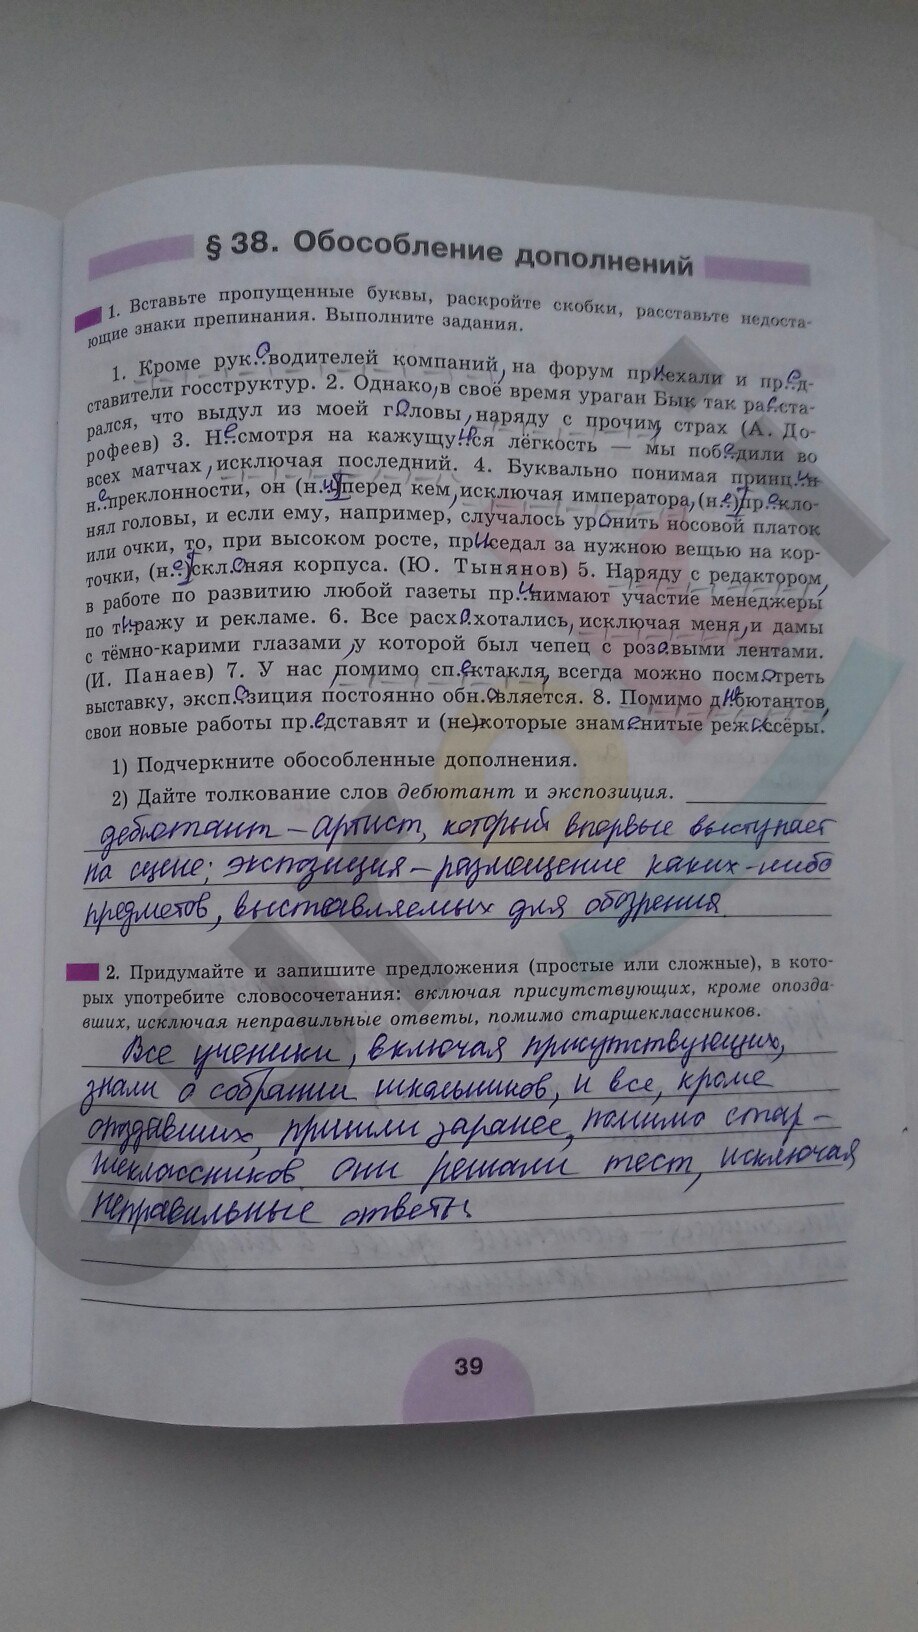 гдз 8 класс рабочая тетрадь часть 2 страница 39 русский язык Рыбченкова, Александрова